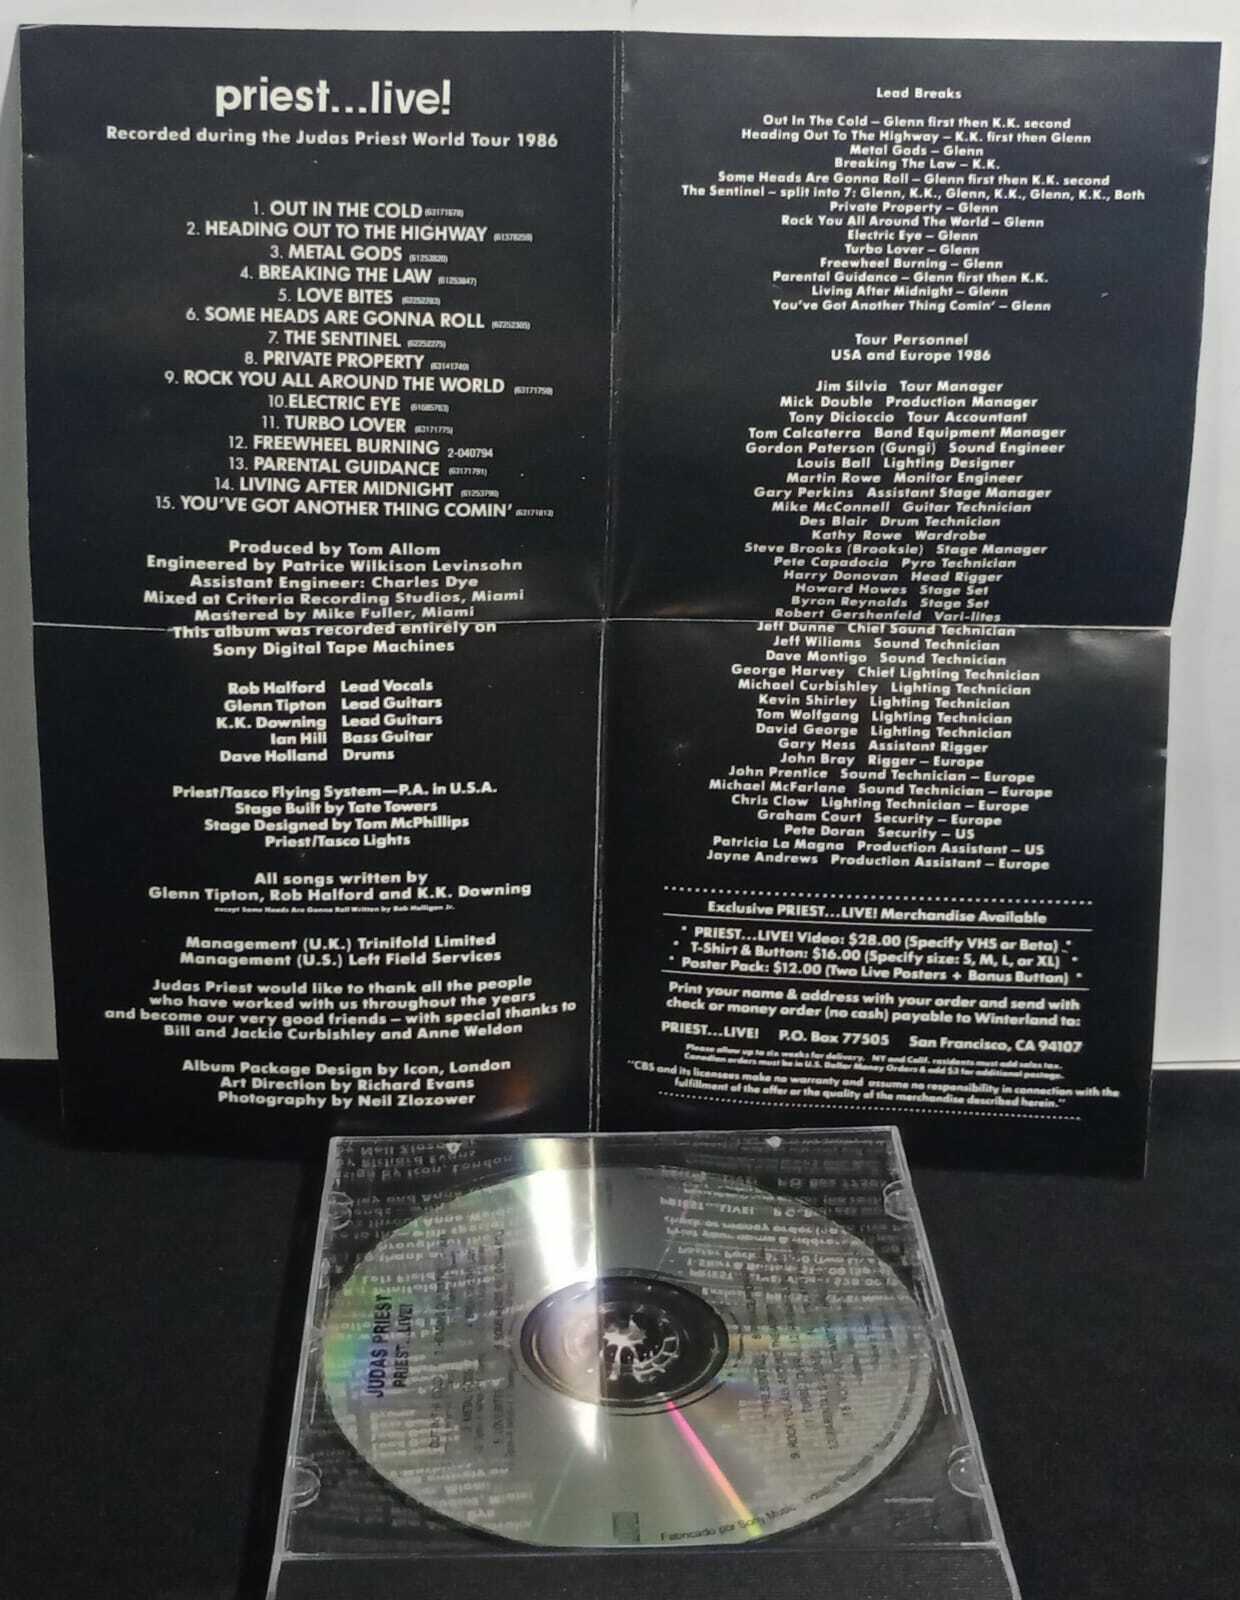 CD - Judas Priest - priest live